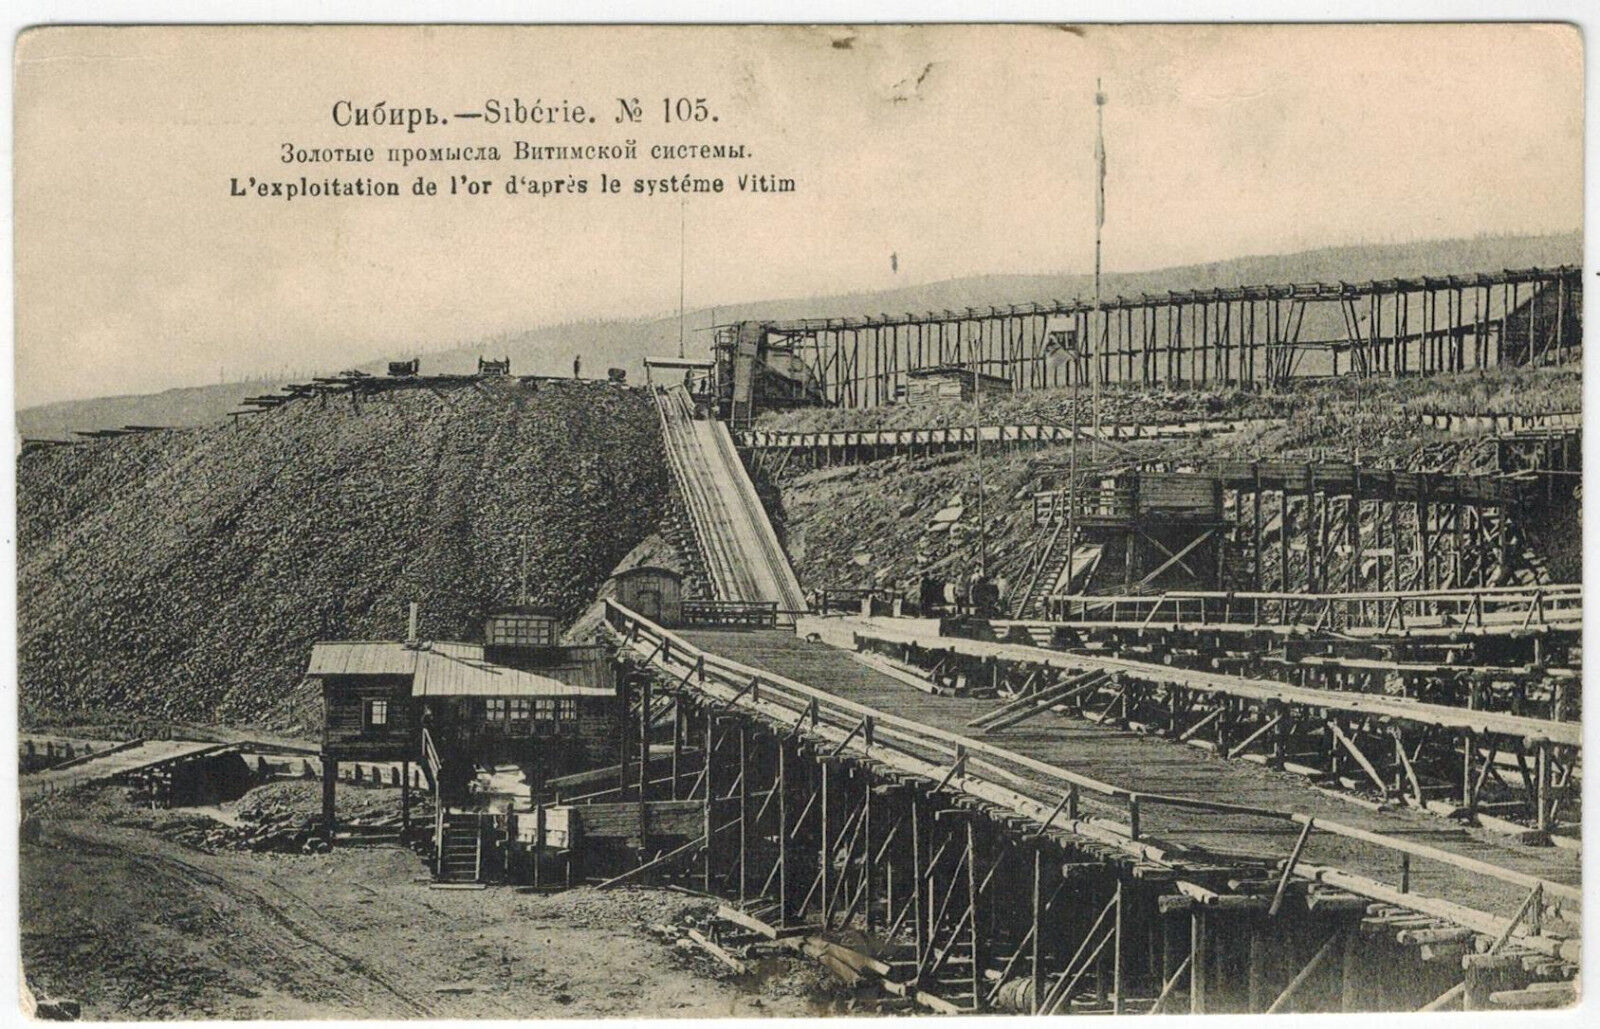 Gold Industry Minings in Vitim River Area, Russian Siberia, 1910s